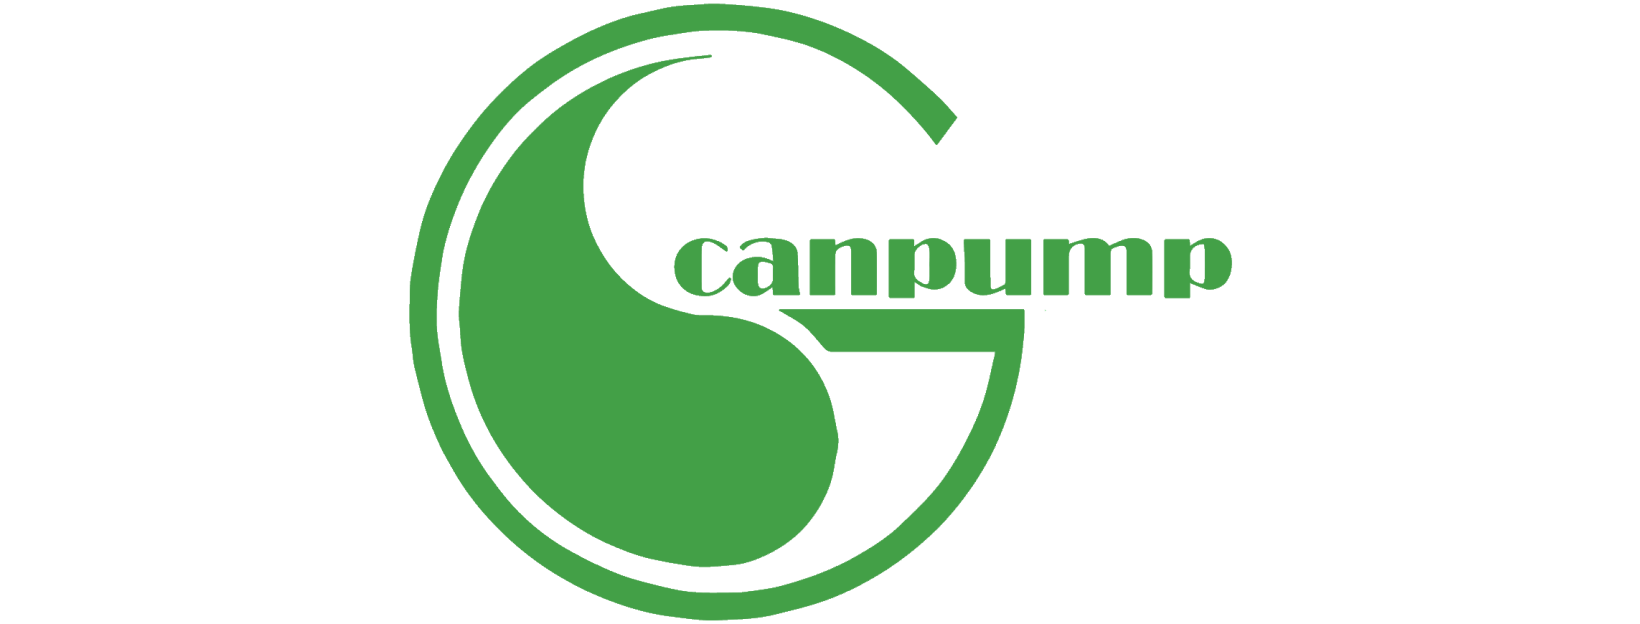 Green Canpump logo